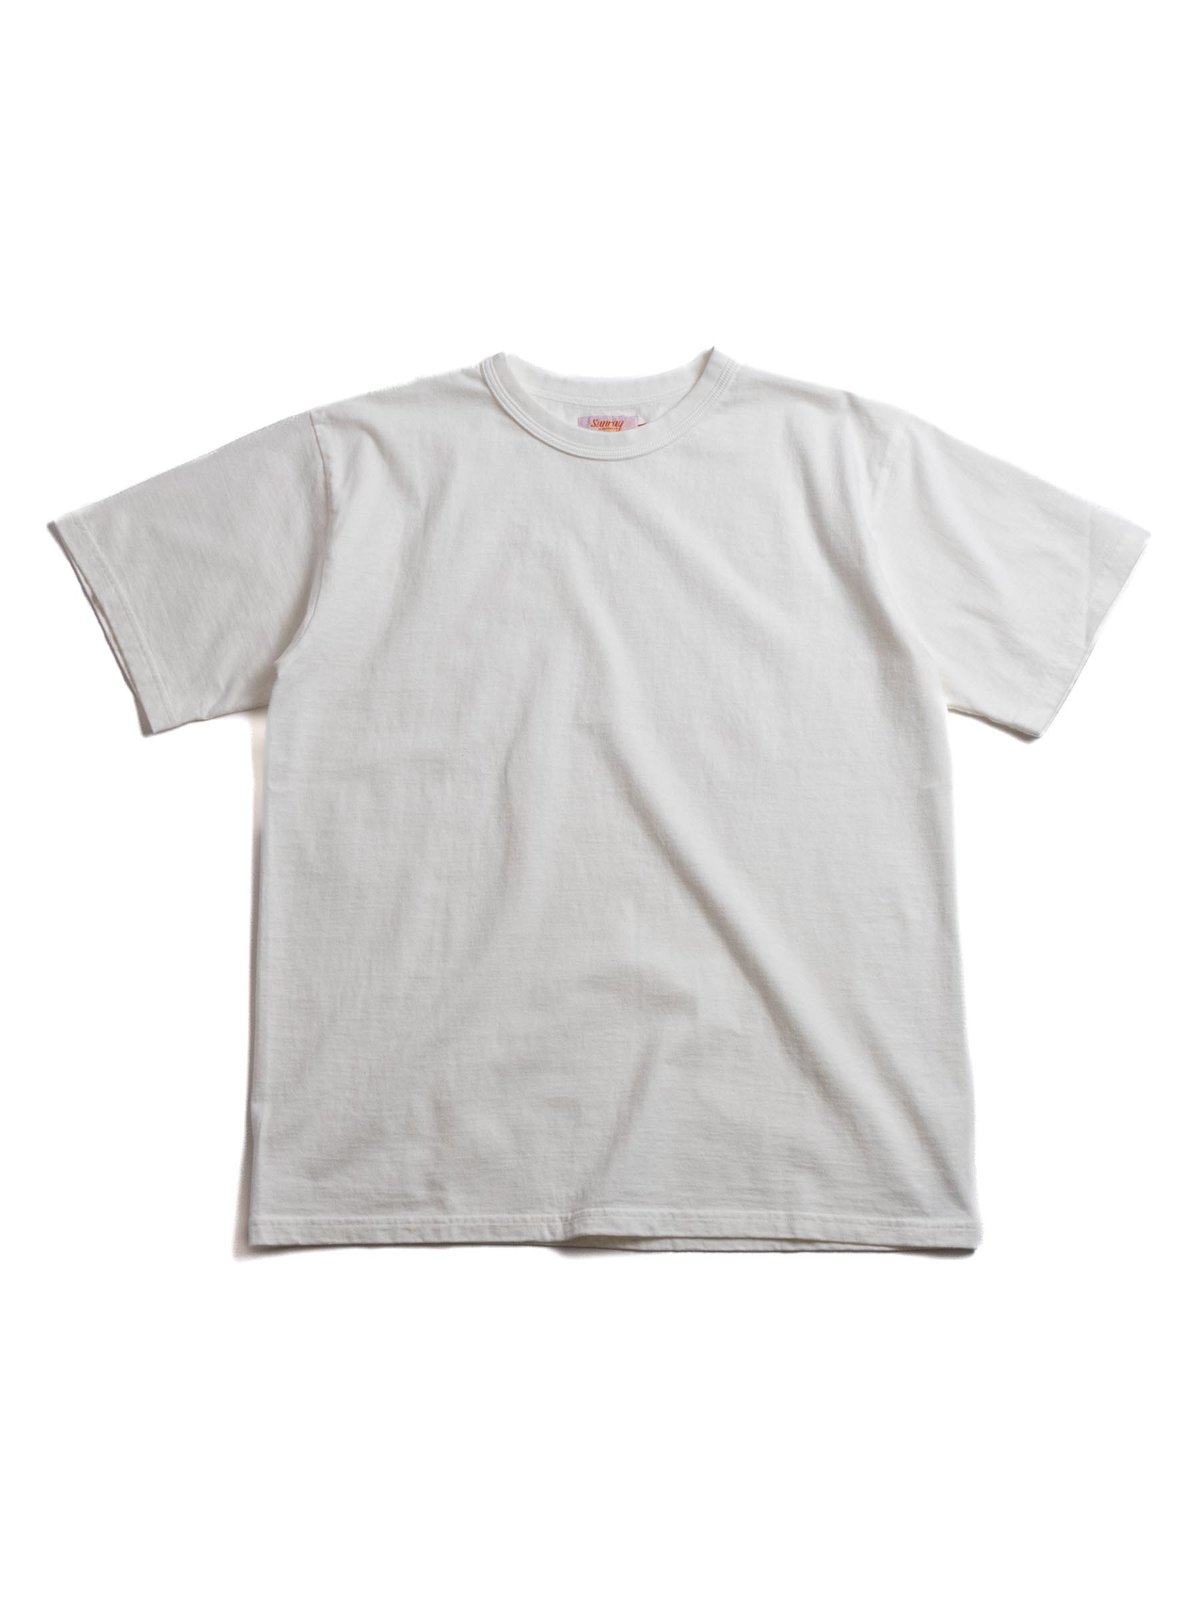 MAKAHA S/S T SHIRT OFF WHITE by Sunray Sportswear – The Bureau